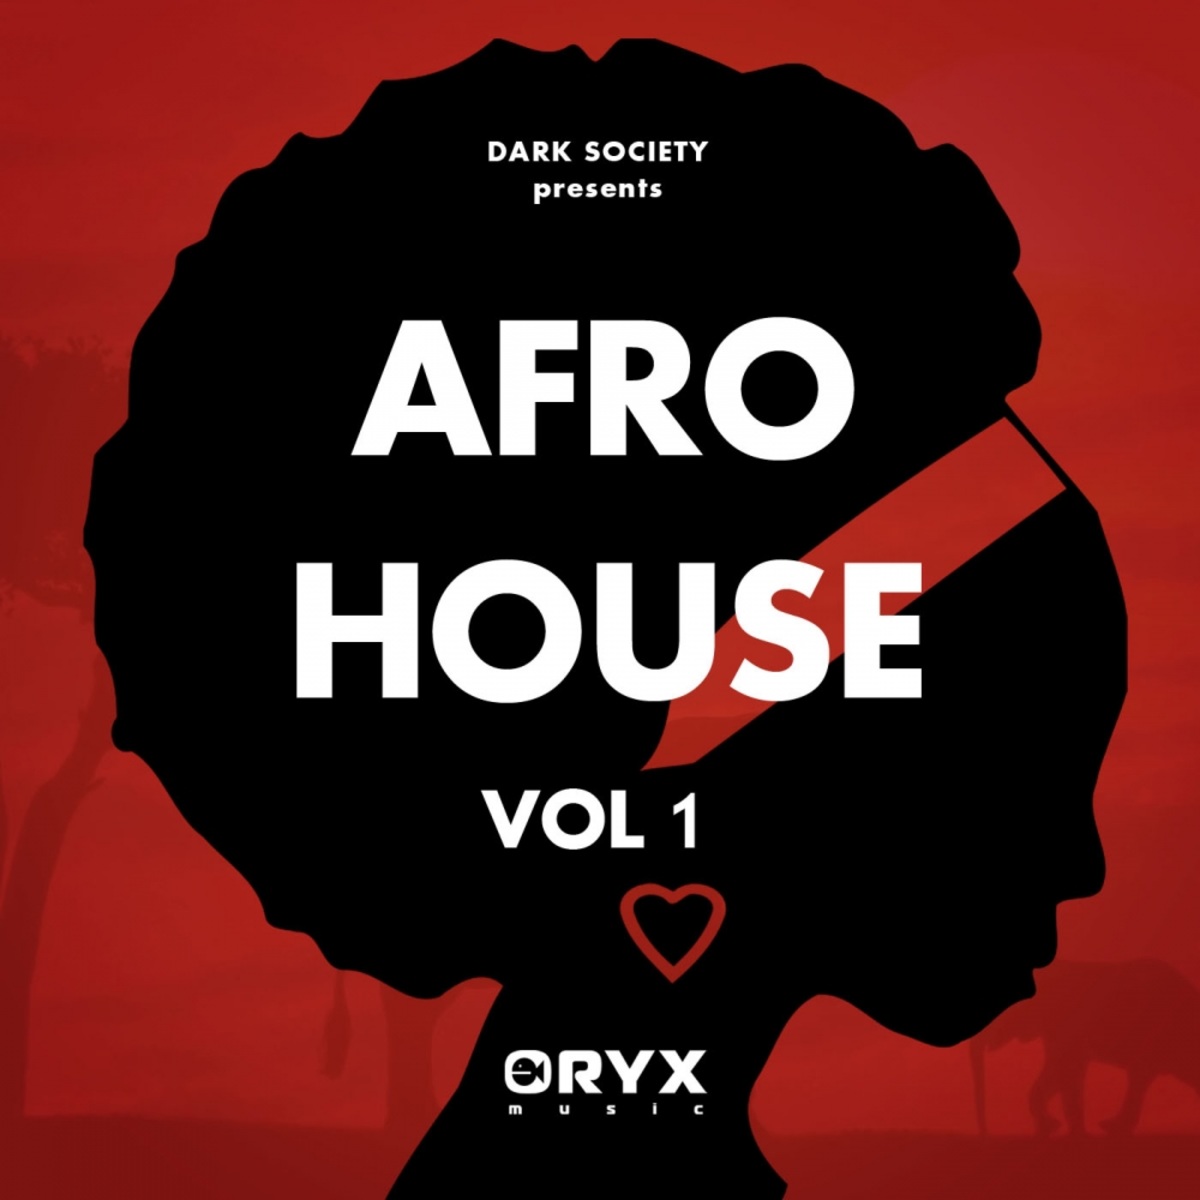 Dark Society - Afro House, Vol. 1 / Oryx Music